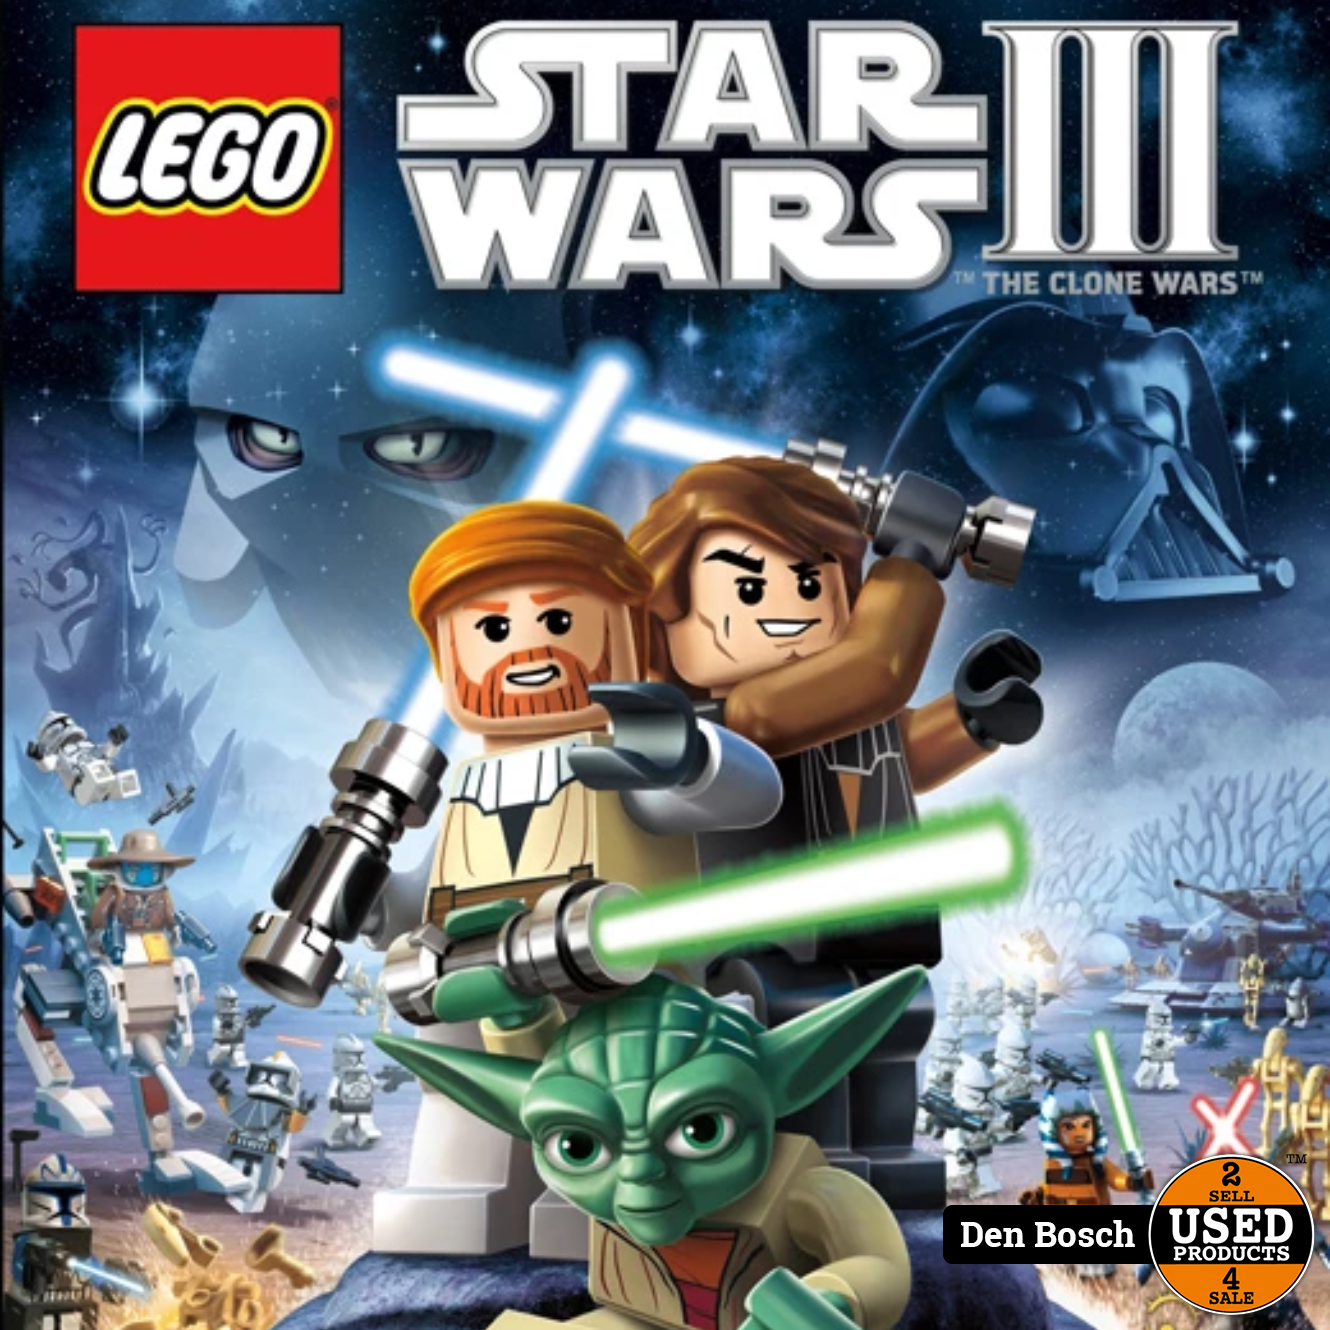 Belastingbetaler lid Ijsbeer Lego Star Wars 3 The Clone Wars - Wii game - Used Products Den Bosch